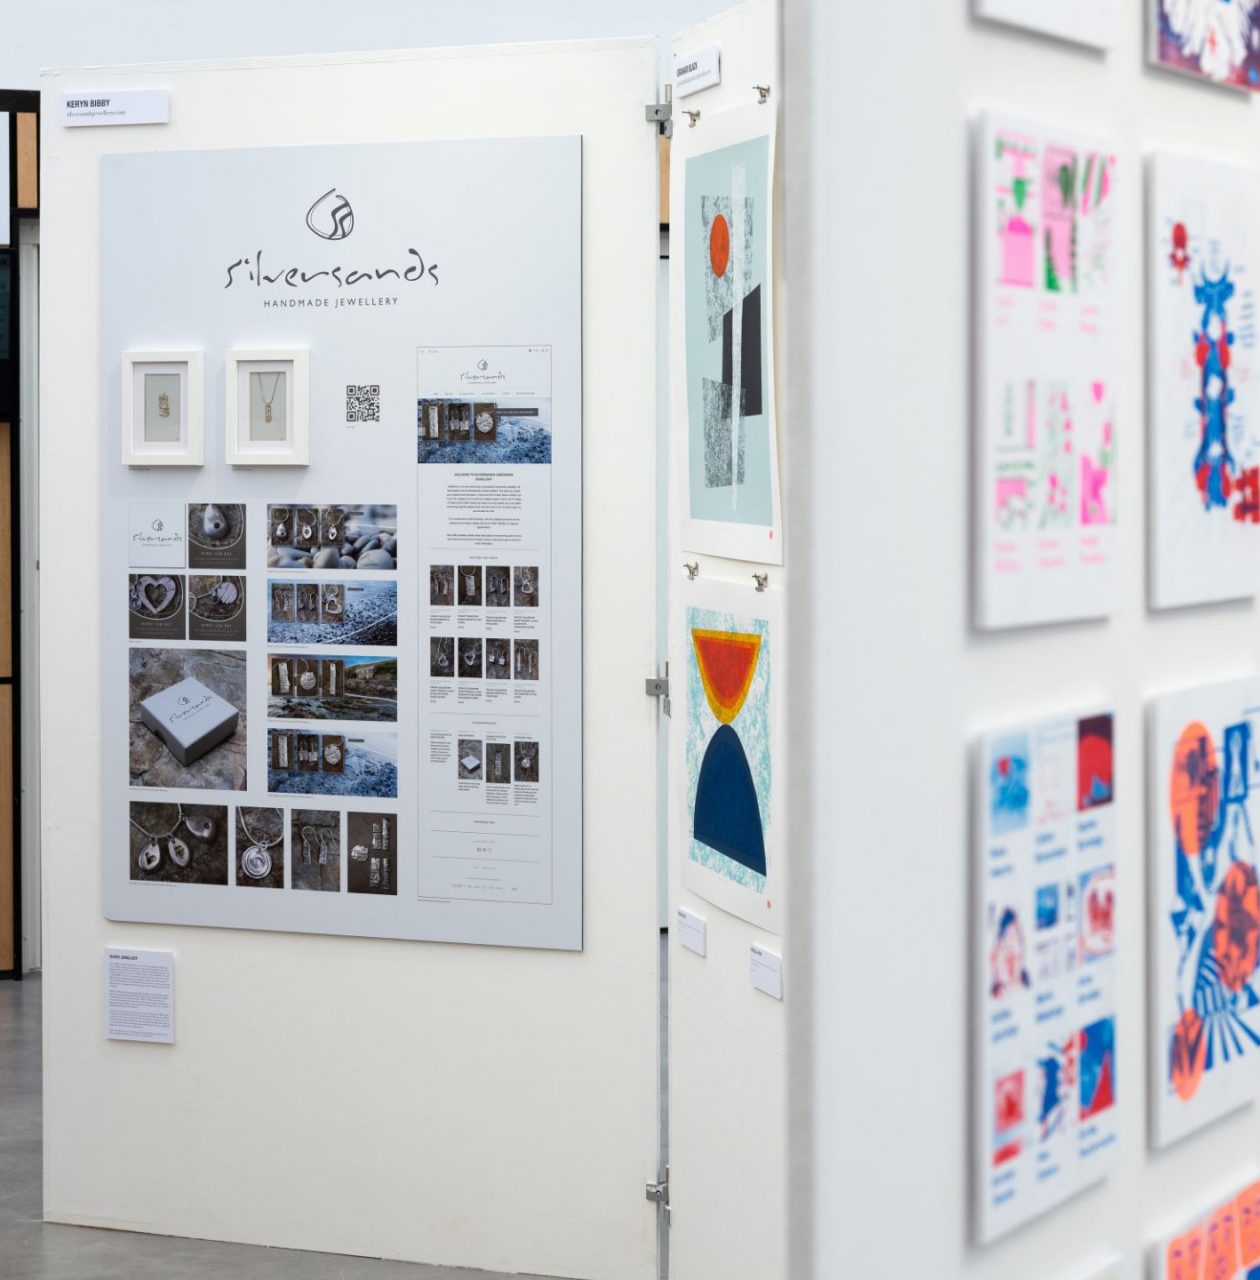 Falmouth Illustration Festival 2022 - Illustration Staff Exhibition